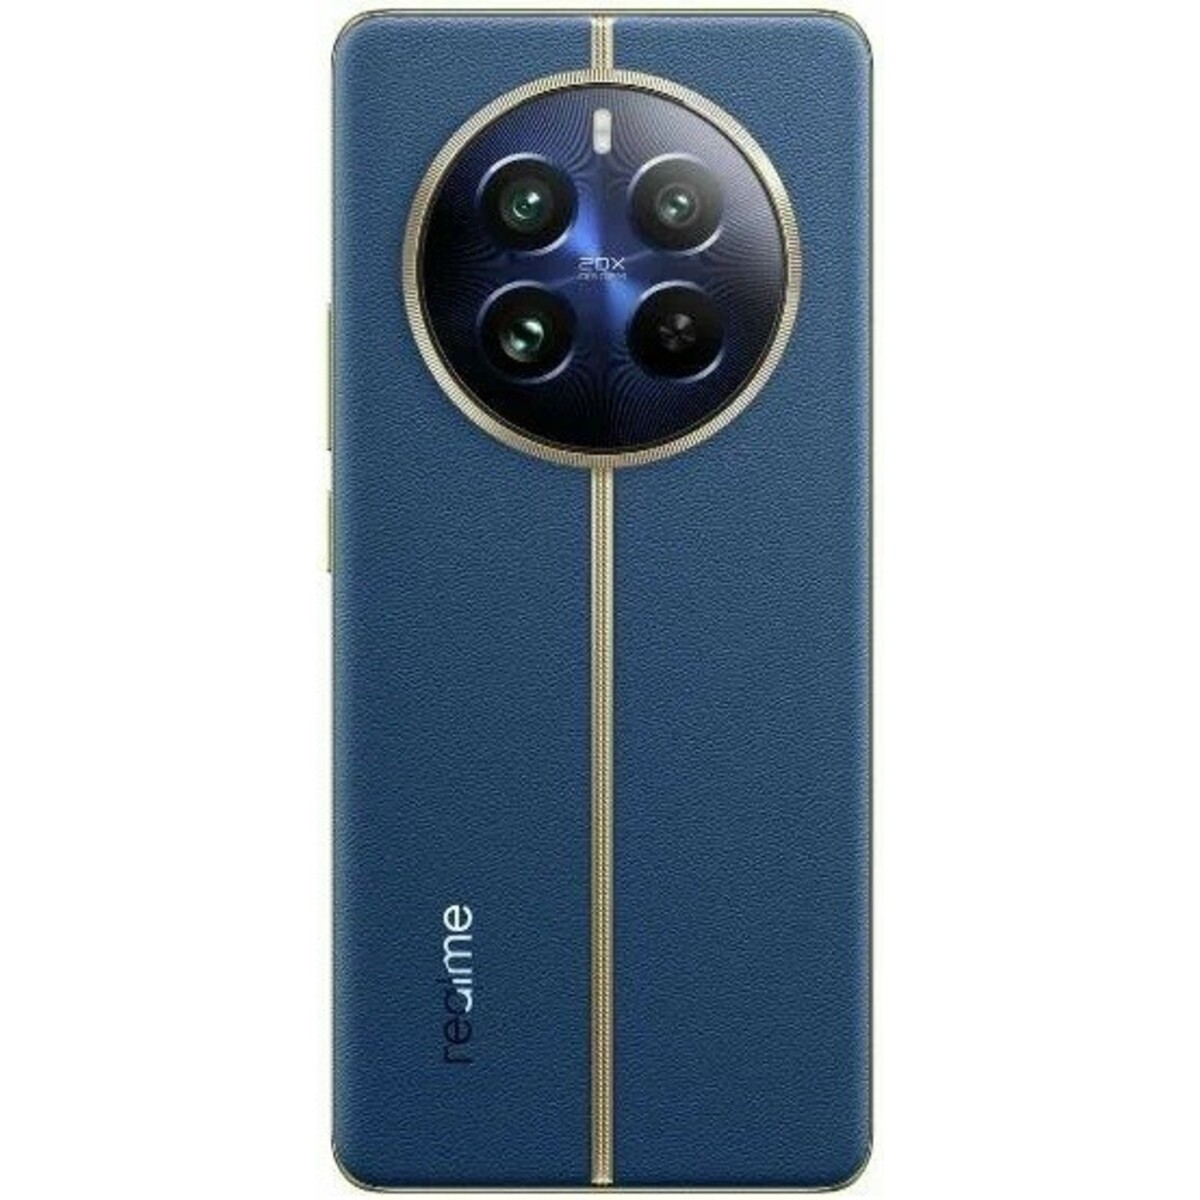 Смартфон realme 12 Pro 12 / 512Gb (Цвет: Blue) 